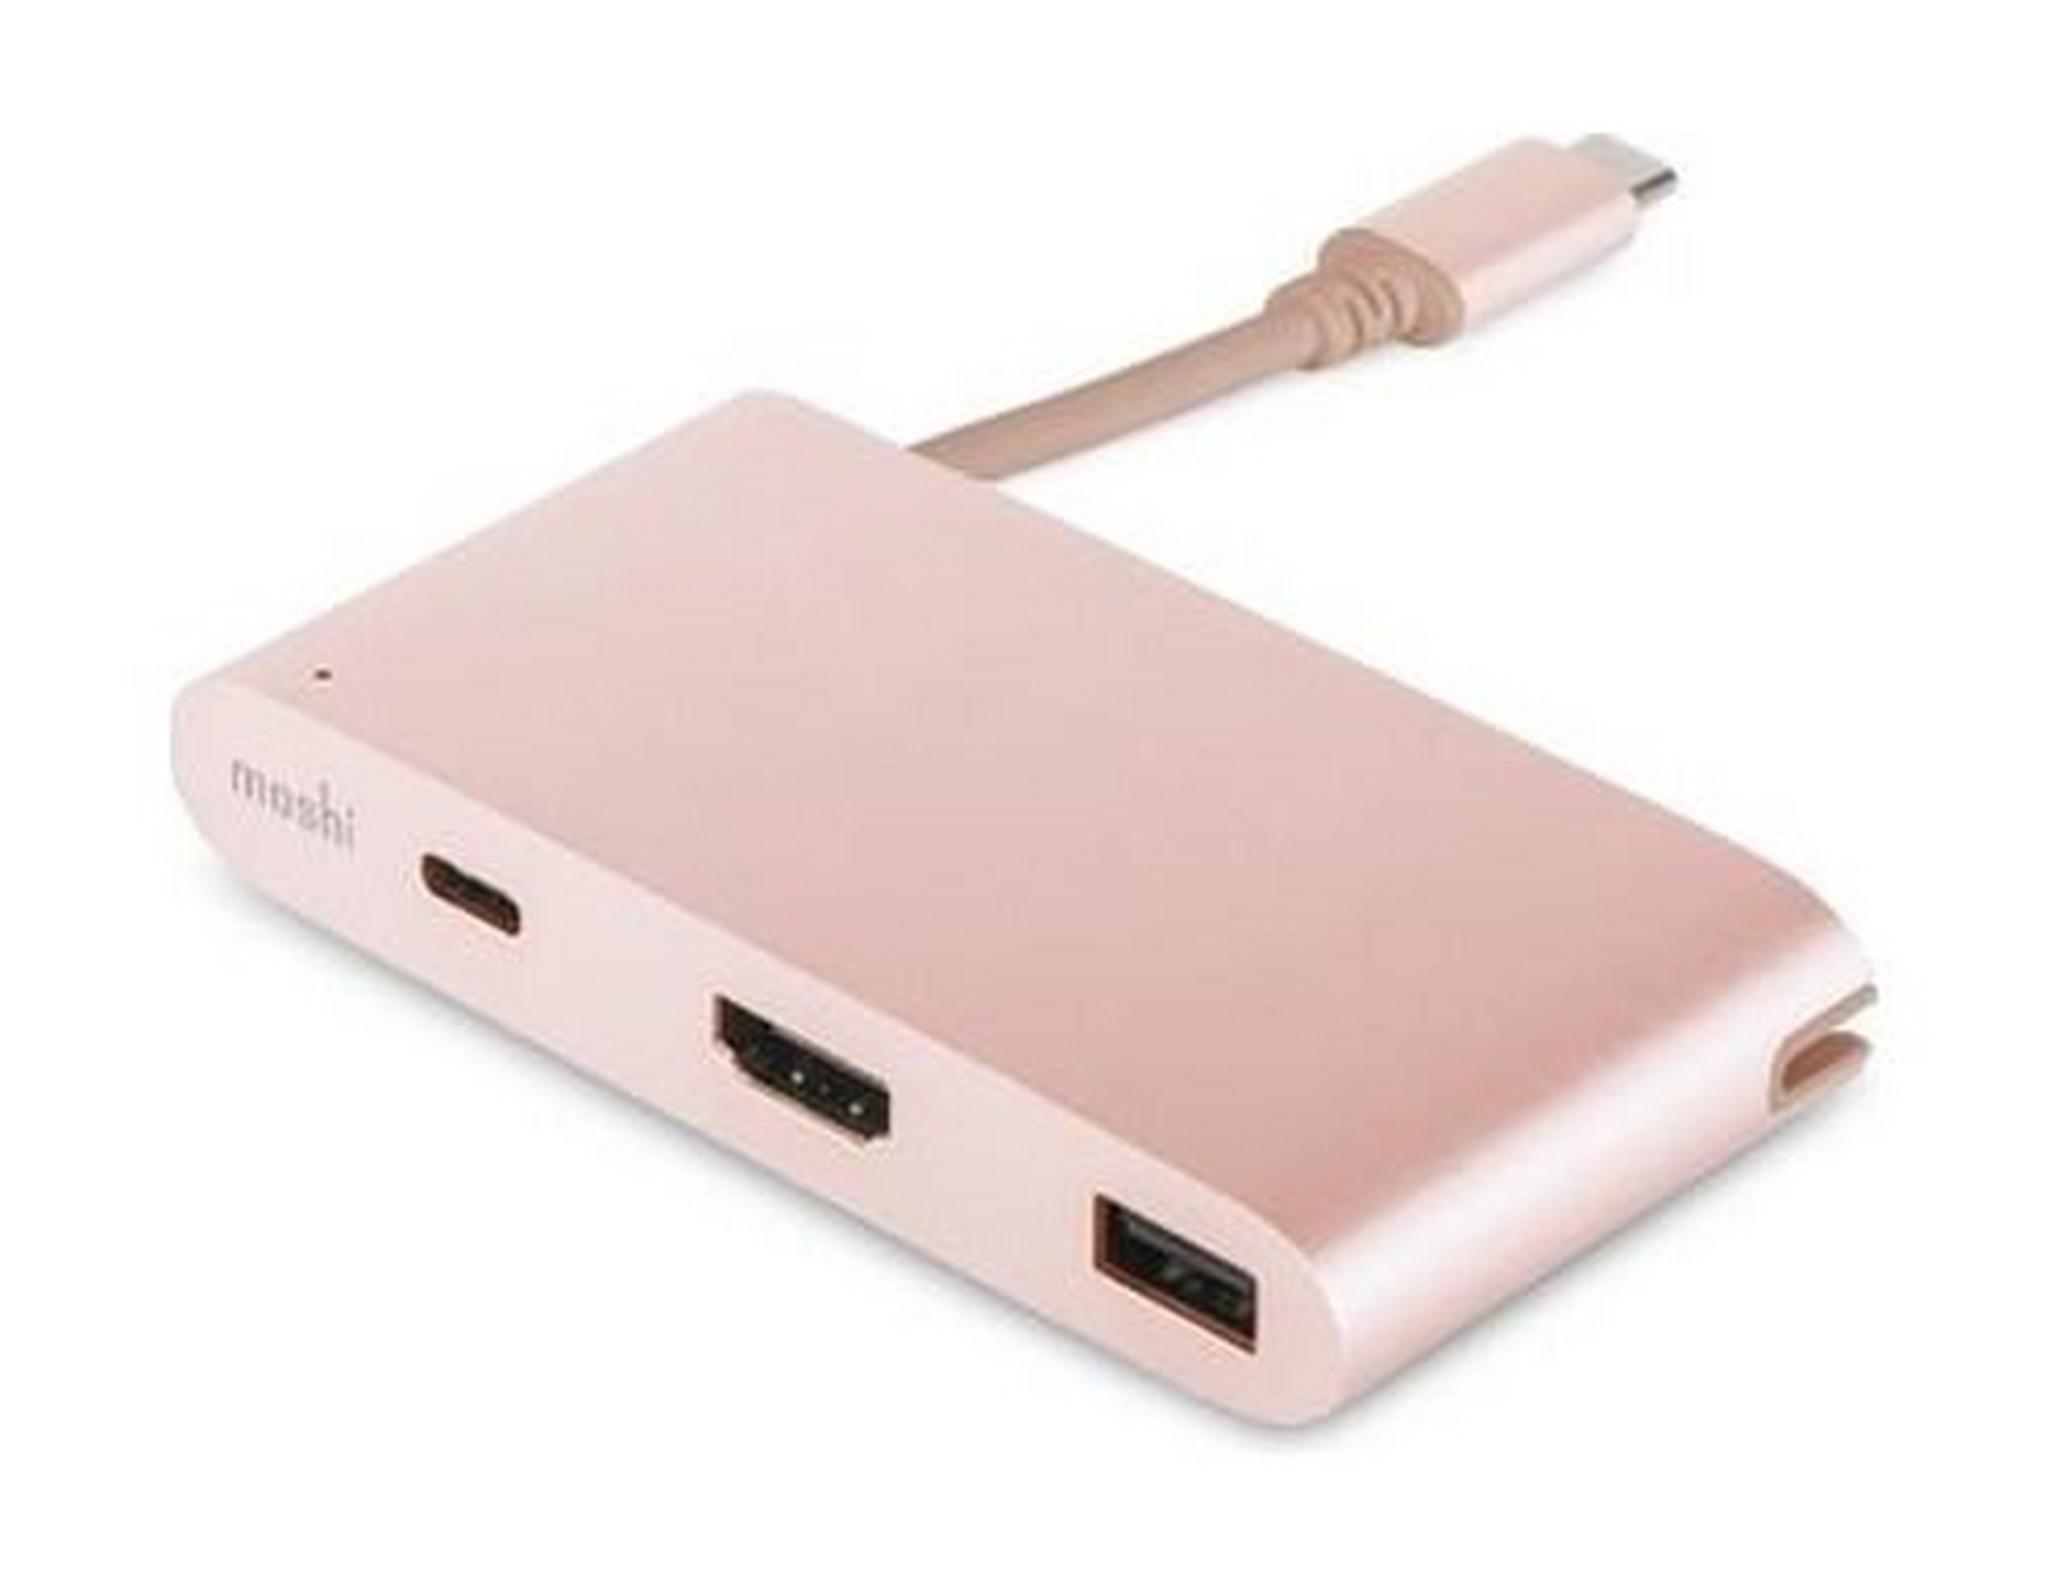 Moshi USB-C Multiport Adapter (99MO084207) - Rose Gold